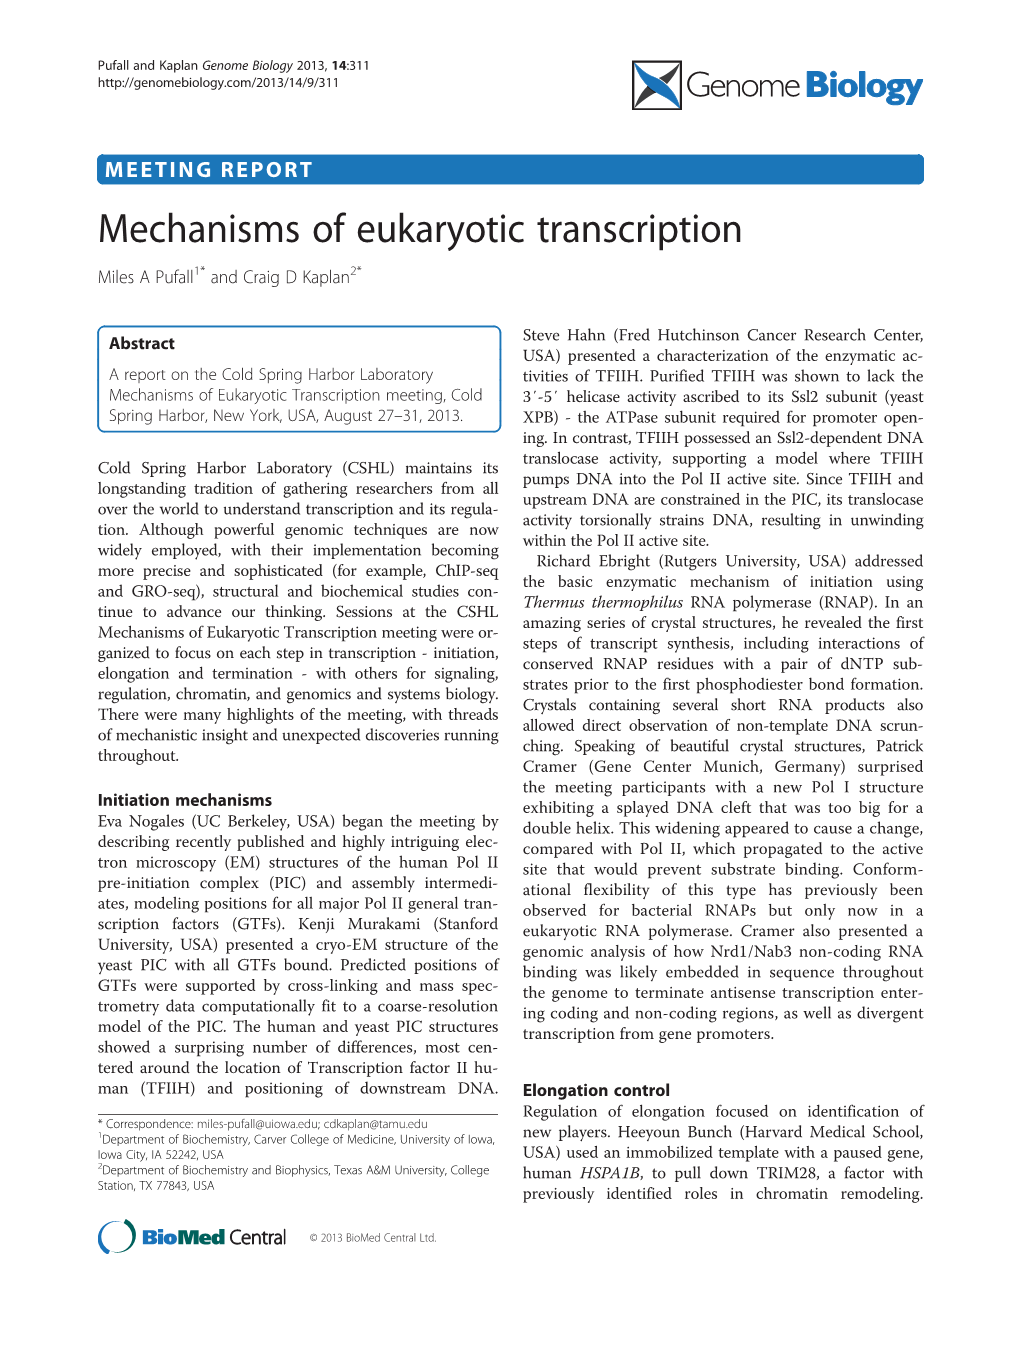 Mechanisms of Eukaryotic Transcription Miles a Pufall1* and Craig D Kaplan2*